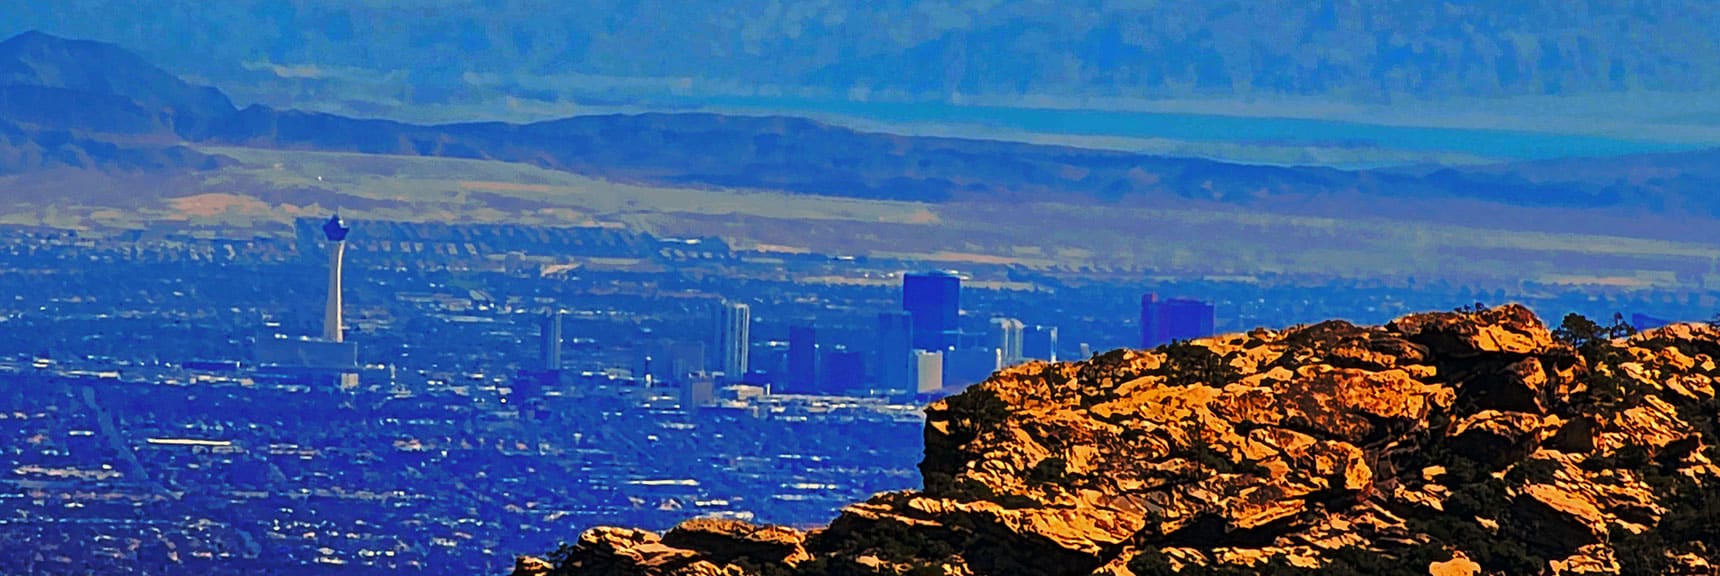 Las Vegas Strip Over North End of Rainbow Mts. Upper Crest Ridgeline | Switchback Spring Ridge | Red Rock Canyon, Nevada